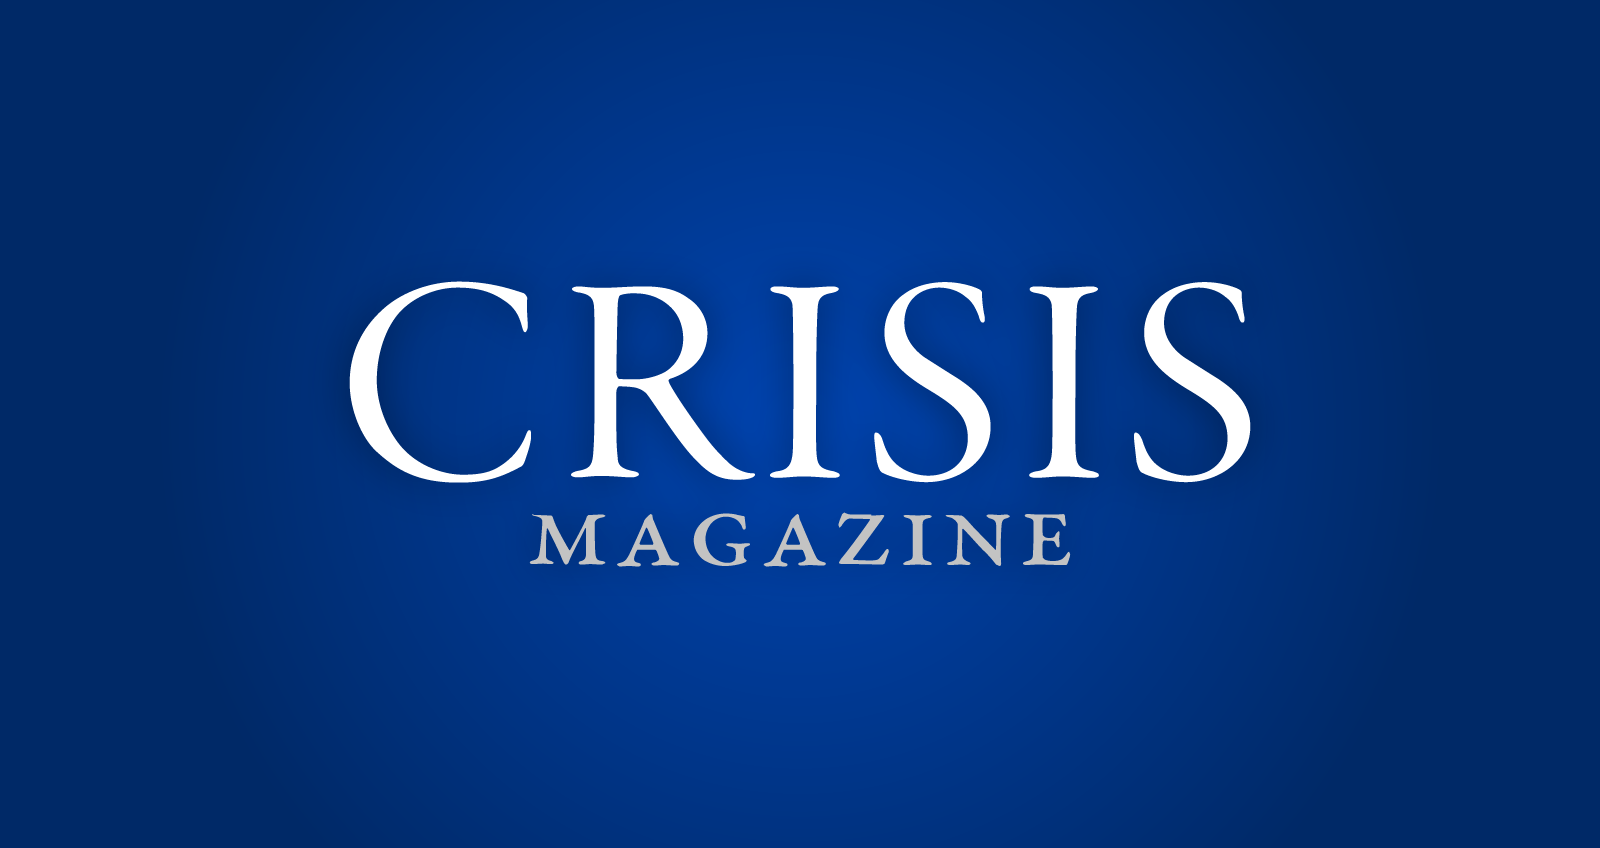 www.crisismagazine.com